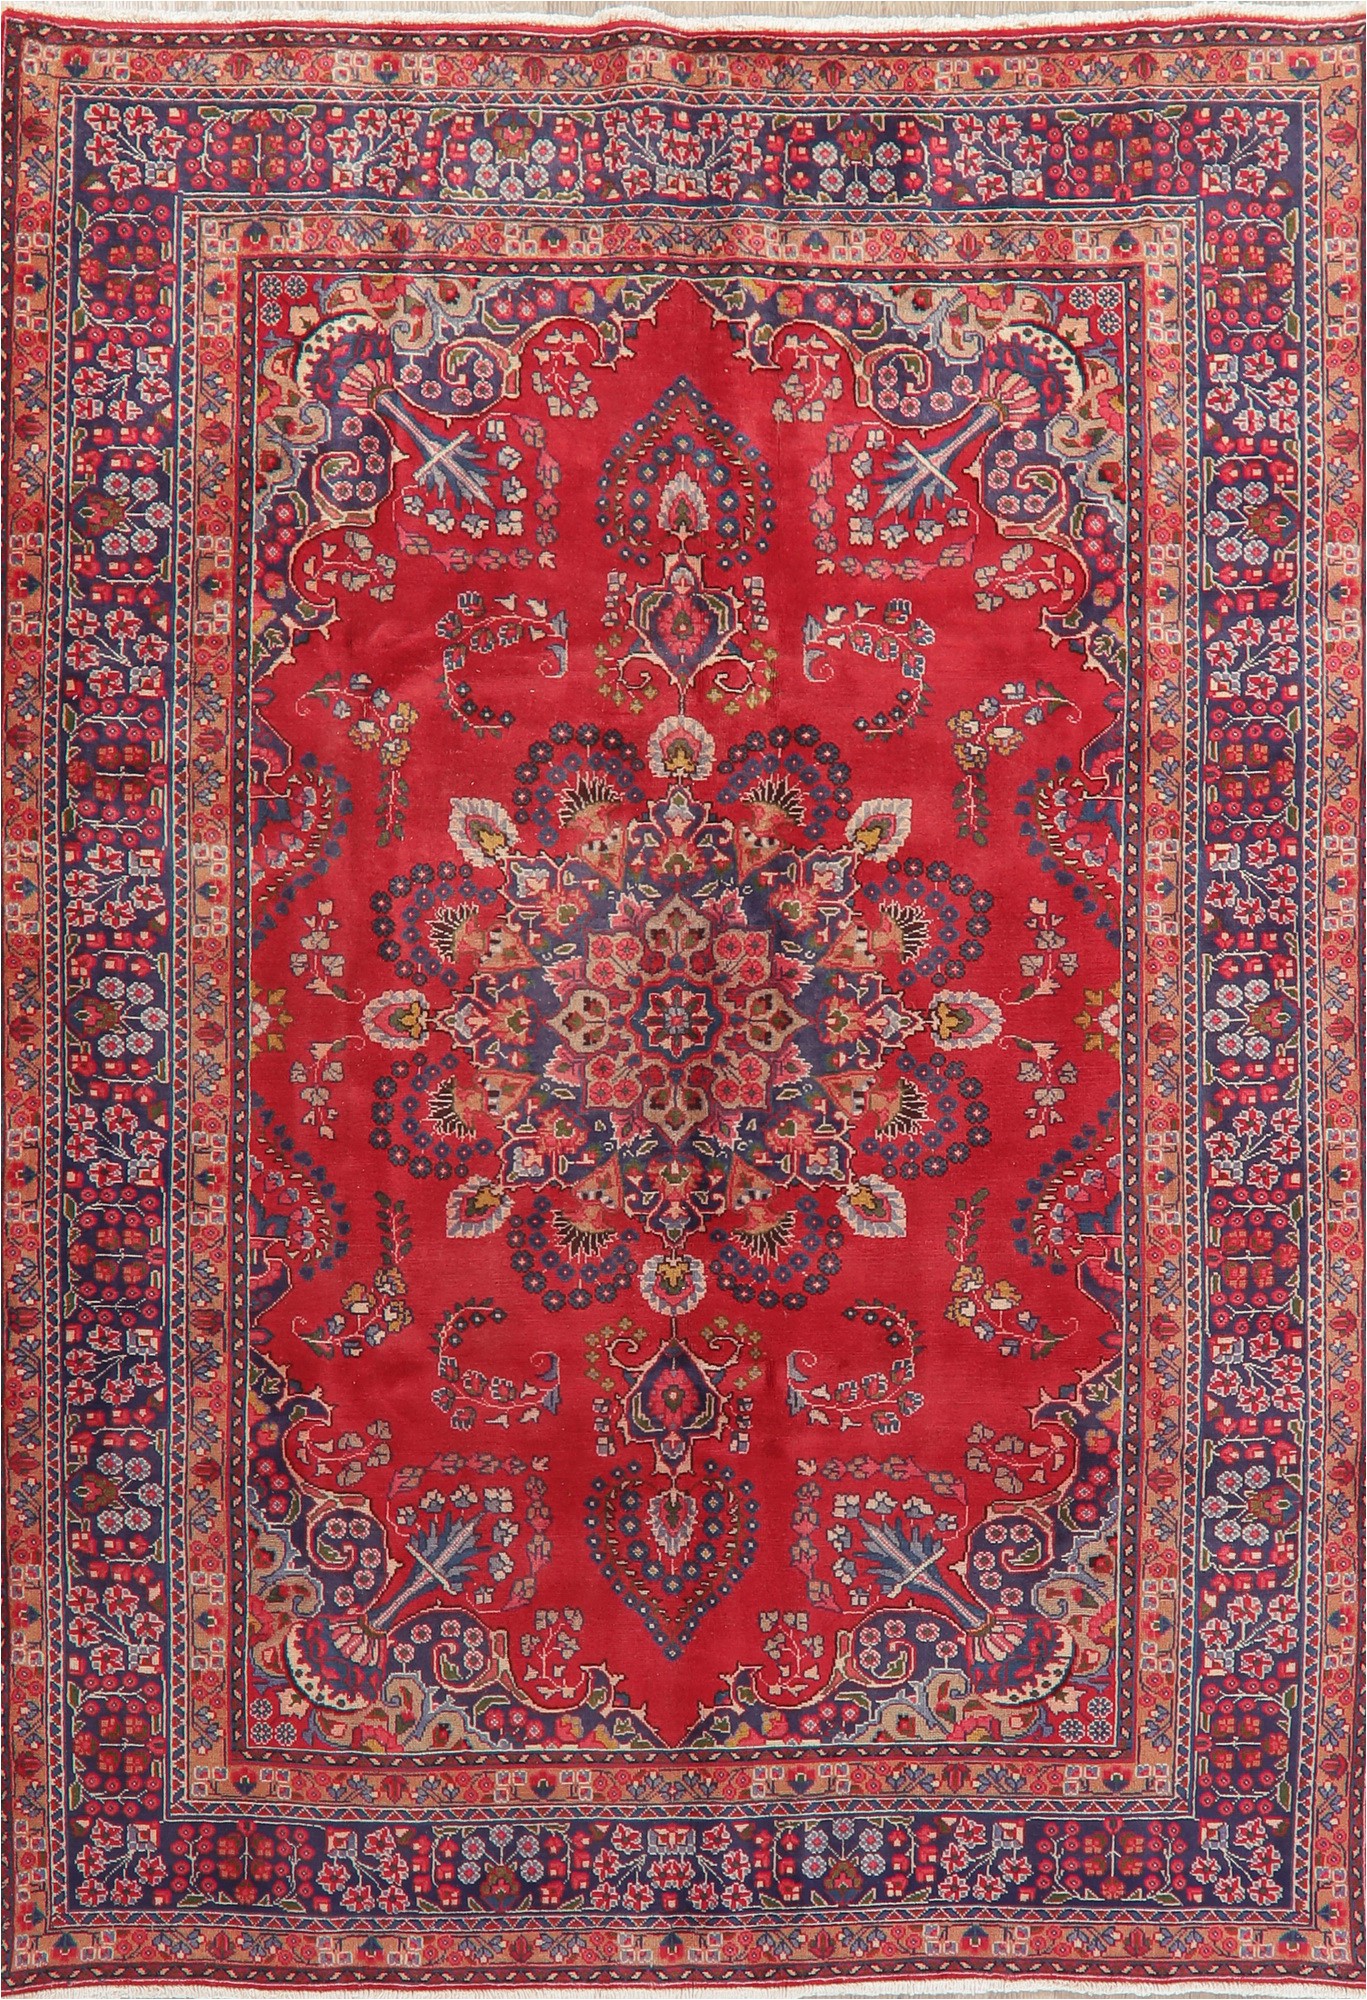 Area Rugs On Sale for Black Friday Black Friday Deal Vintage Red & Navy Blue Floral Mashad oriental Handmade area Rug Medallion Carpet 7×9 Walmart